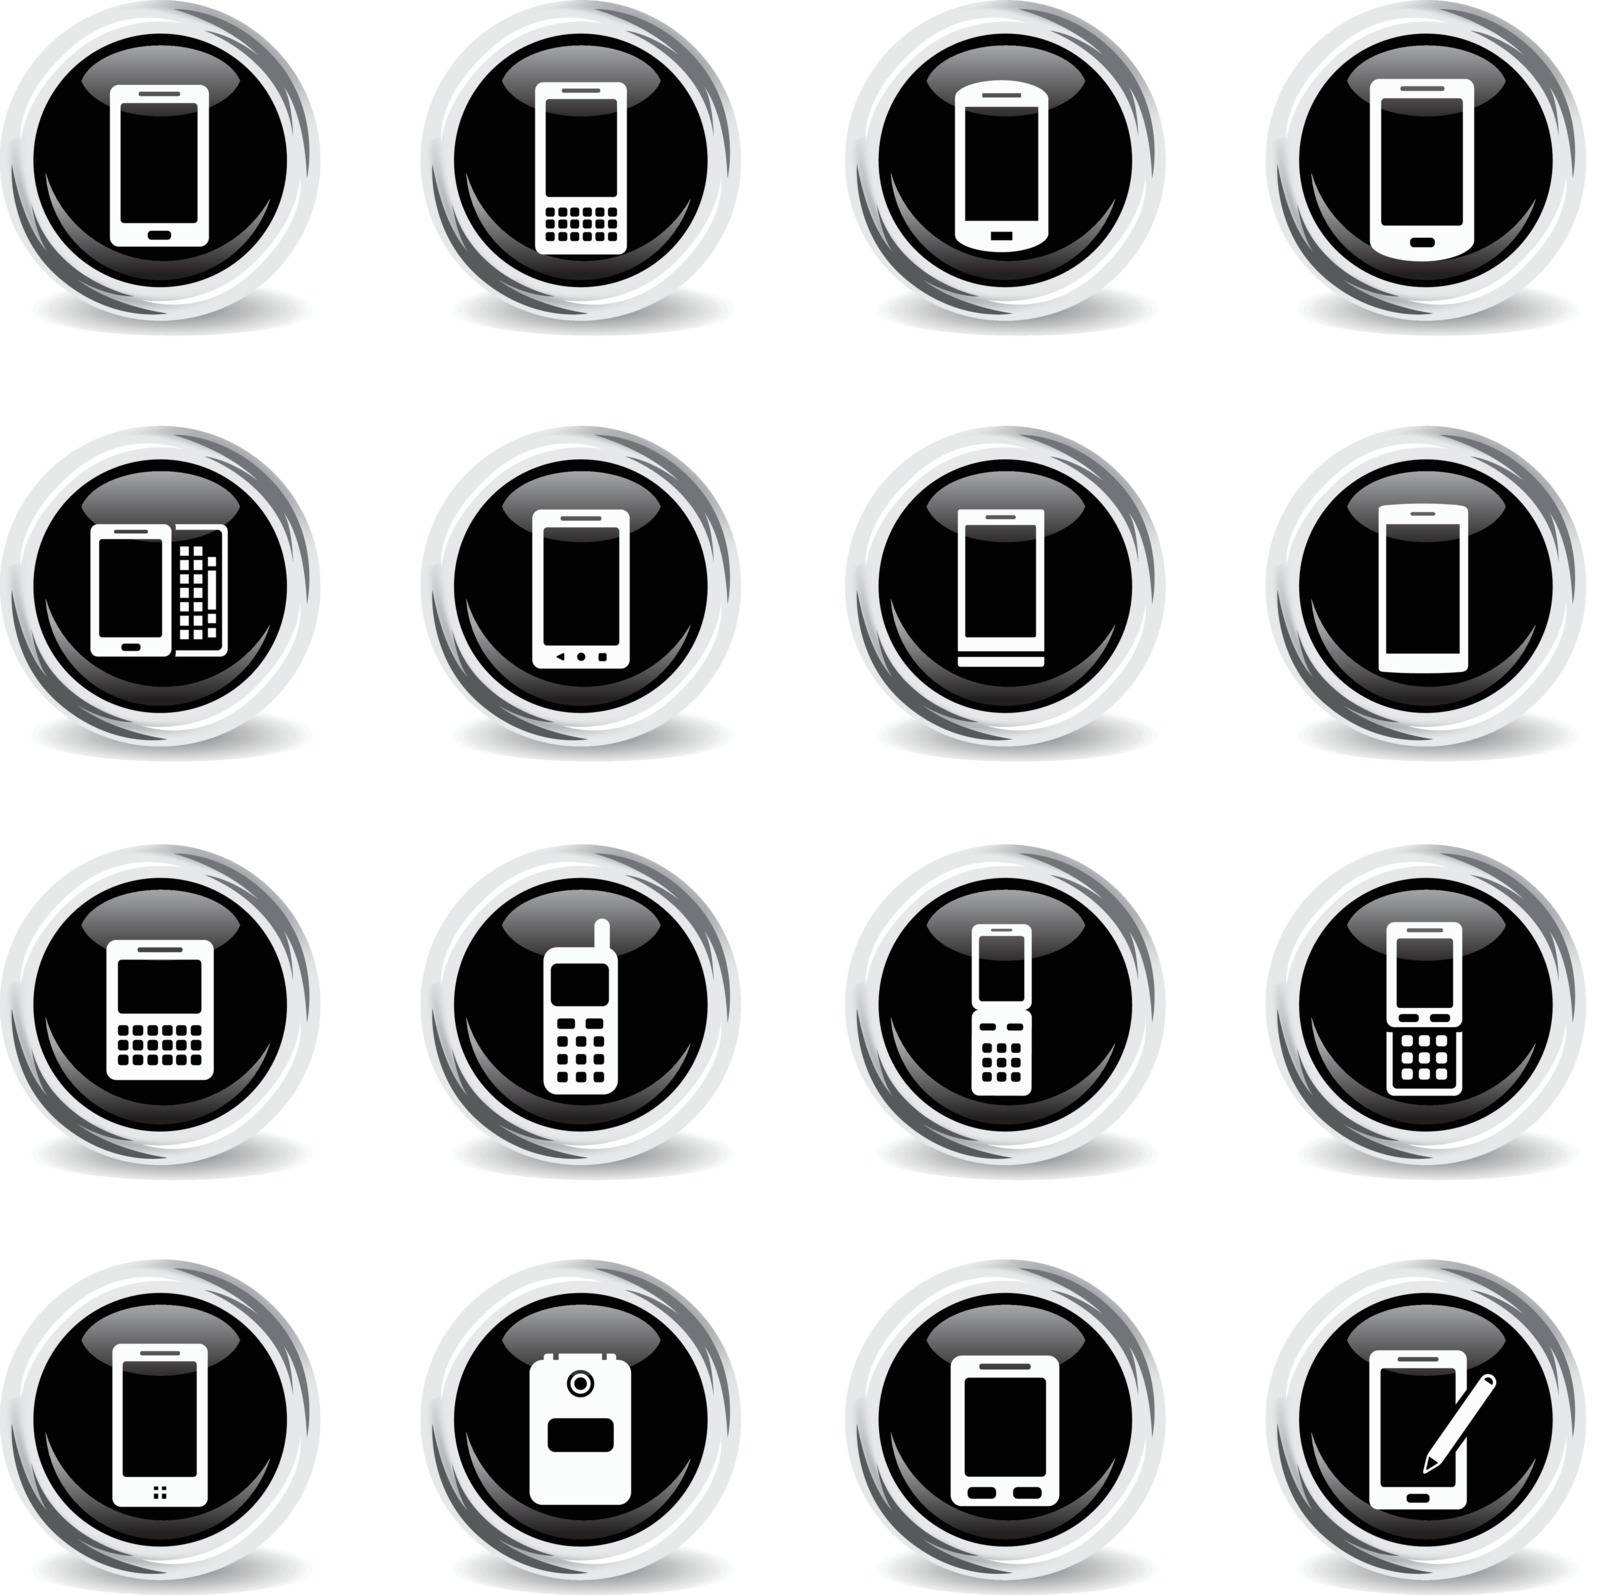 Telephone Icons icons by ayax